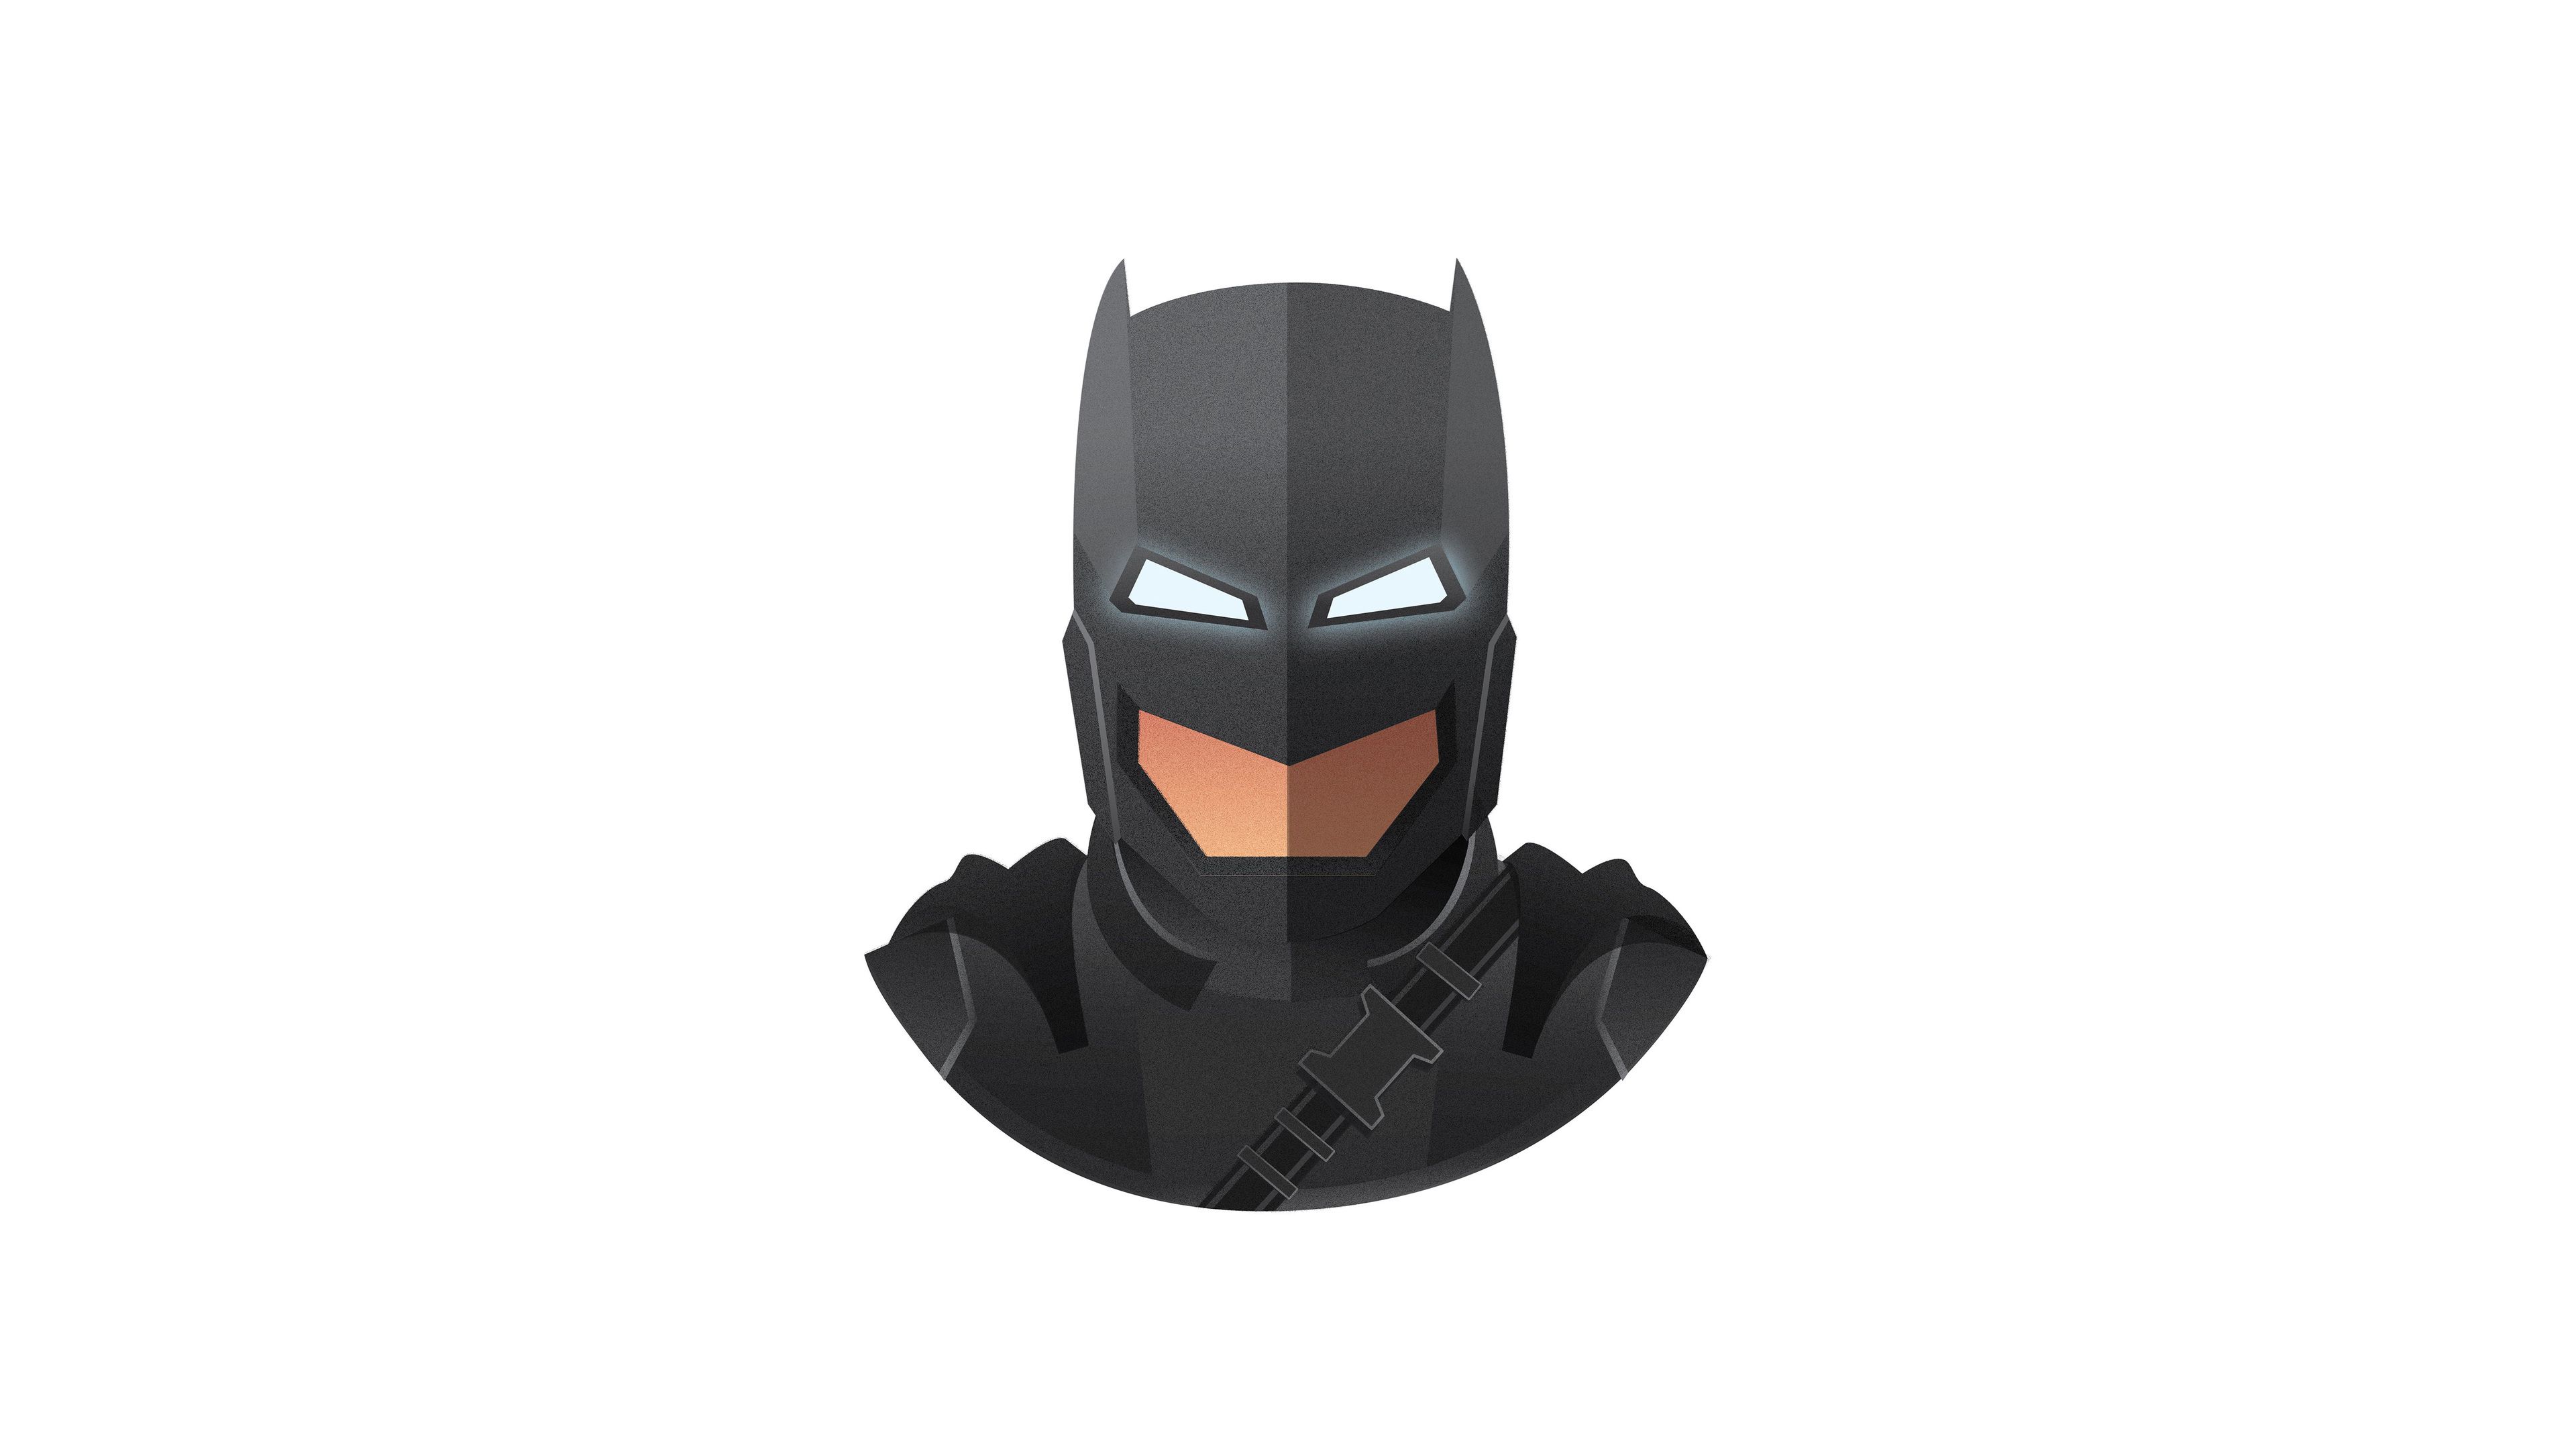 Wallpaper 4k Batman Mech Suit Mask .pixel4k.com